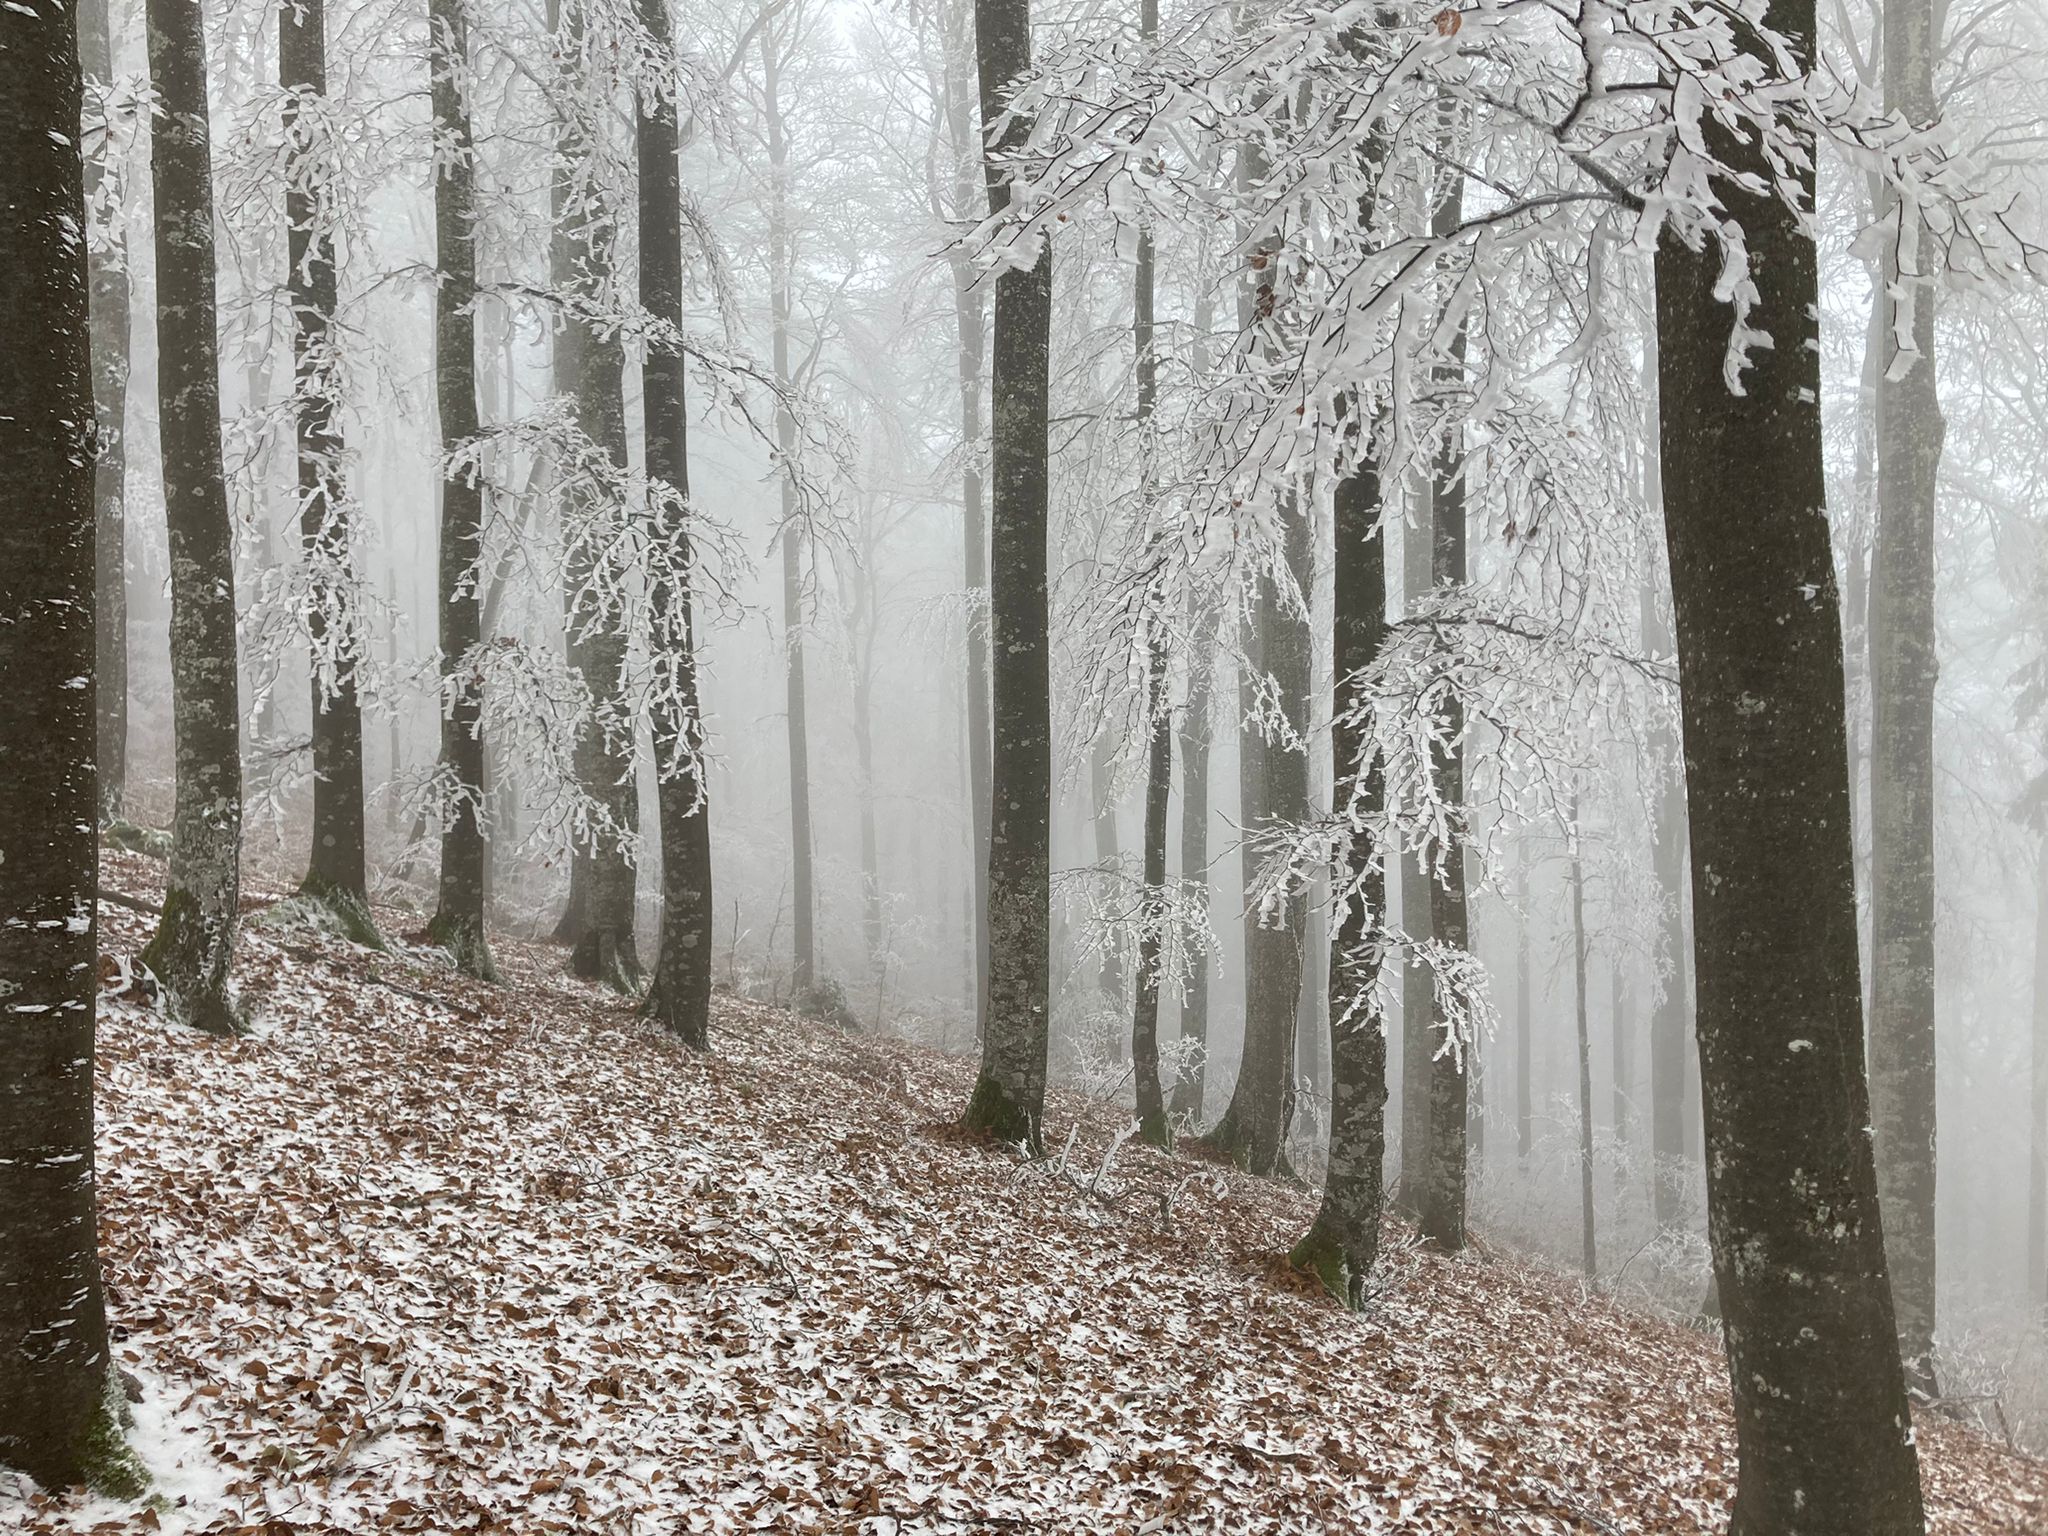 Wald Winter